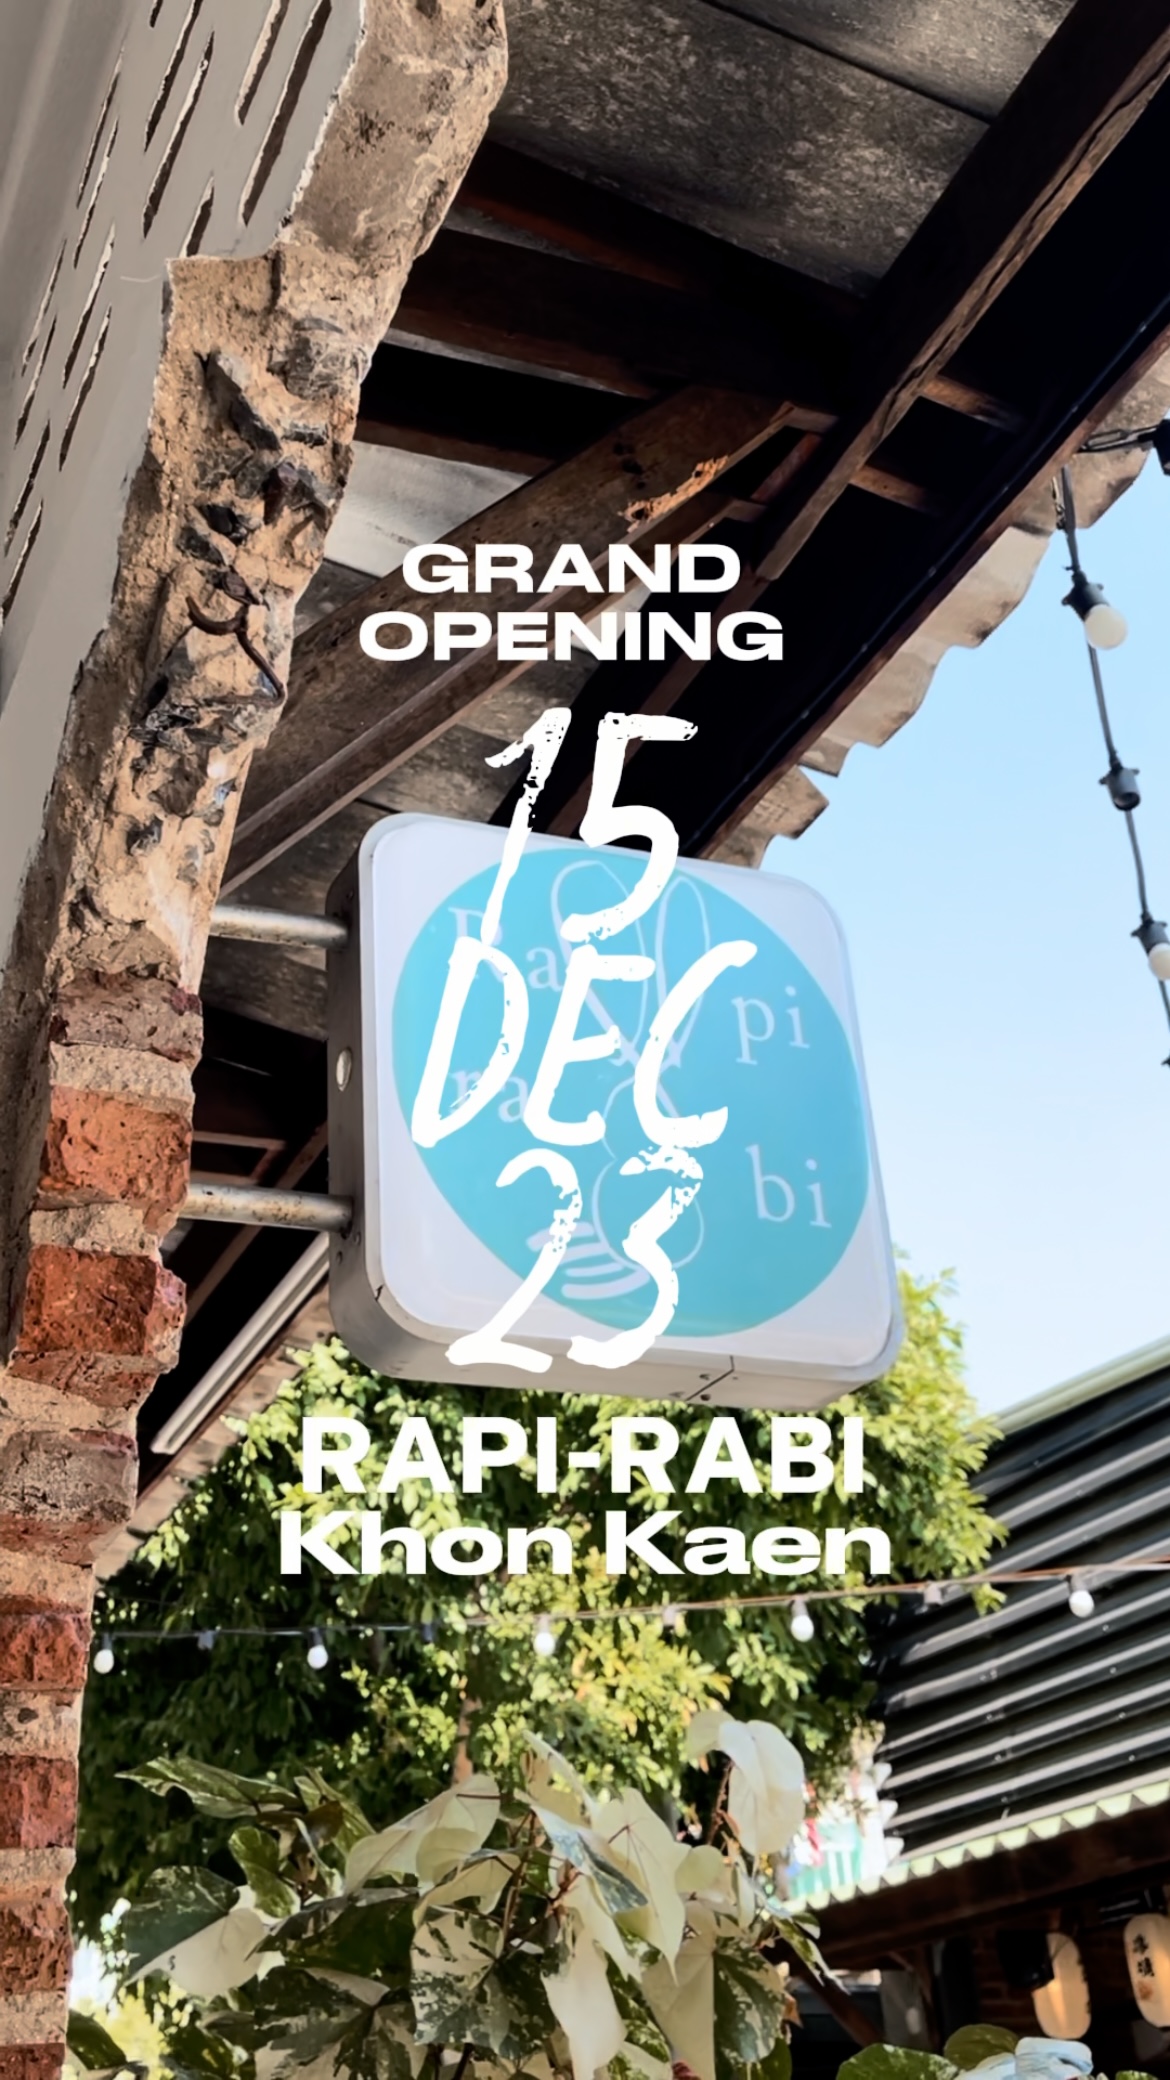 Grand opening Rapi-rabi Khonkaen 🐇 By Rapi-rabi